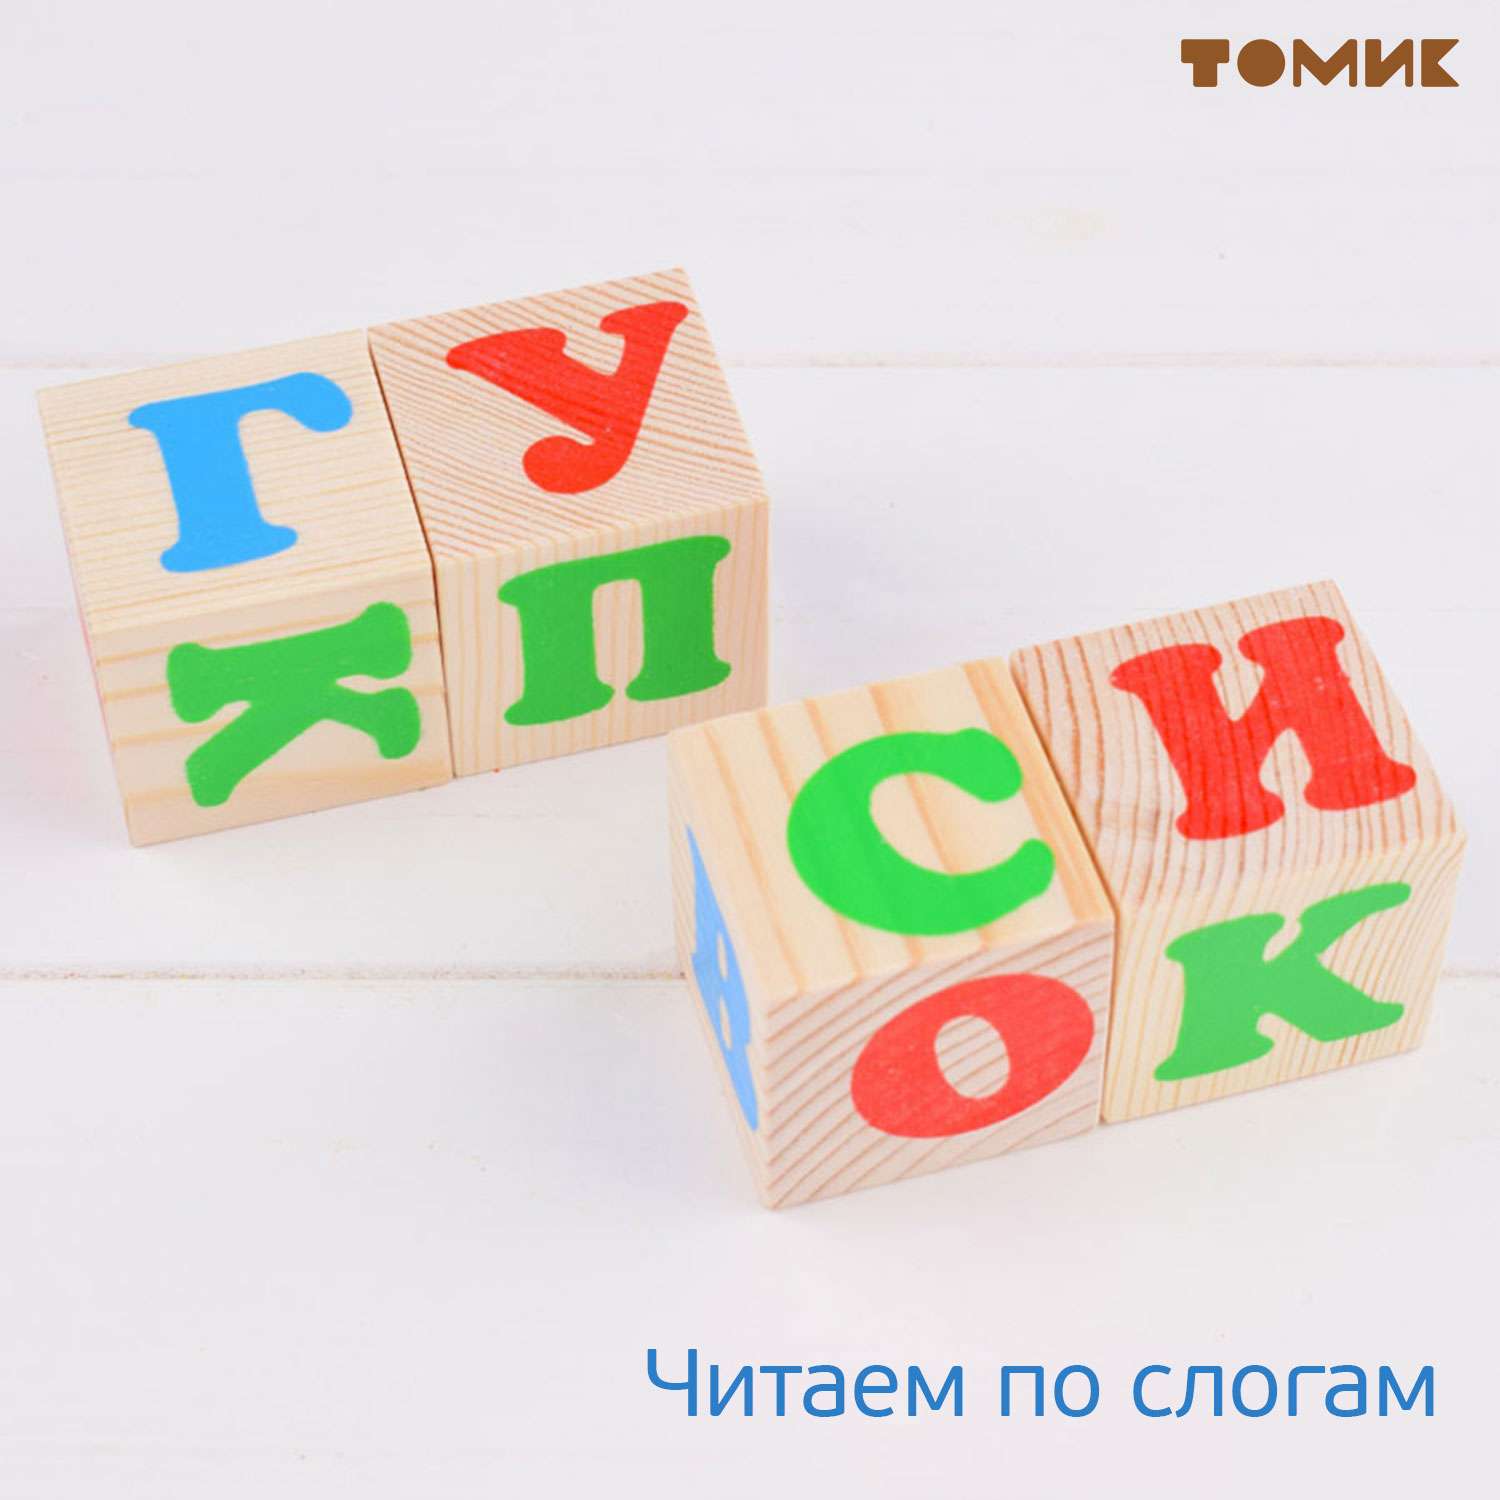 Кубики Томик Алфавит русский 12 штук 1111-1 - фото 8